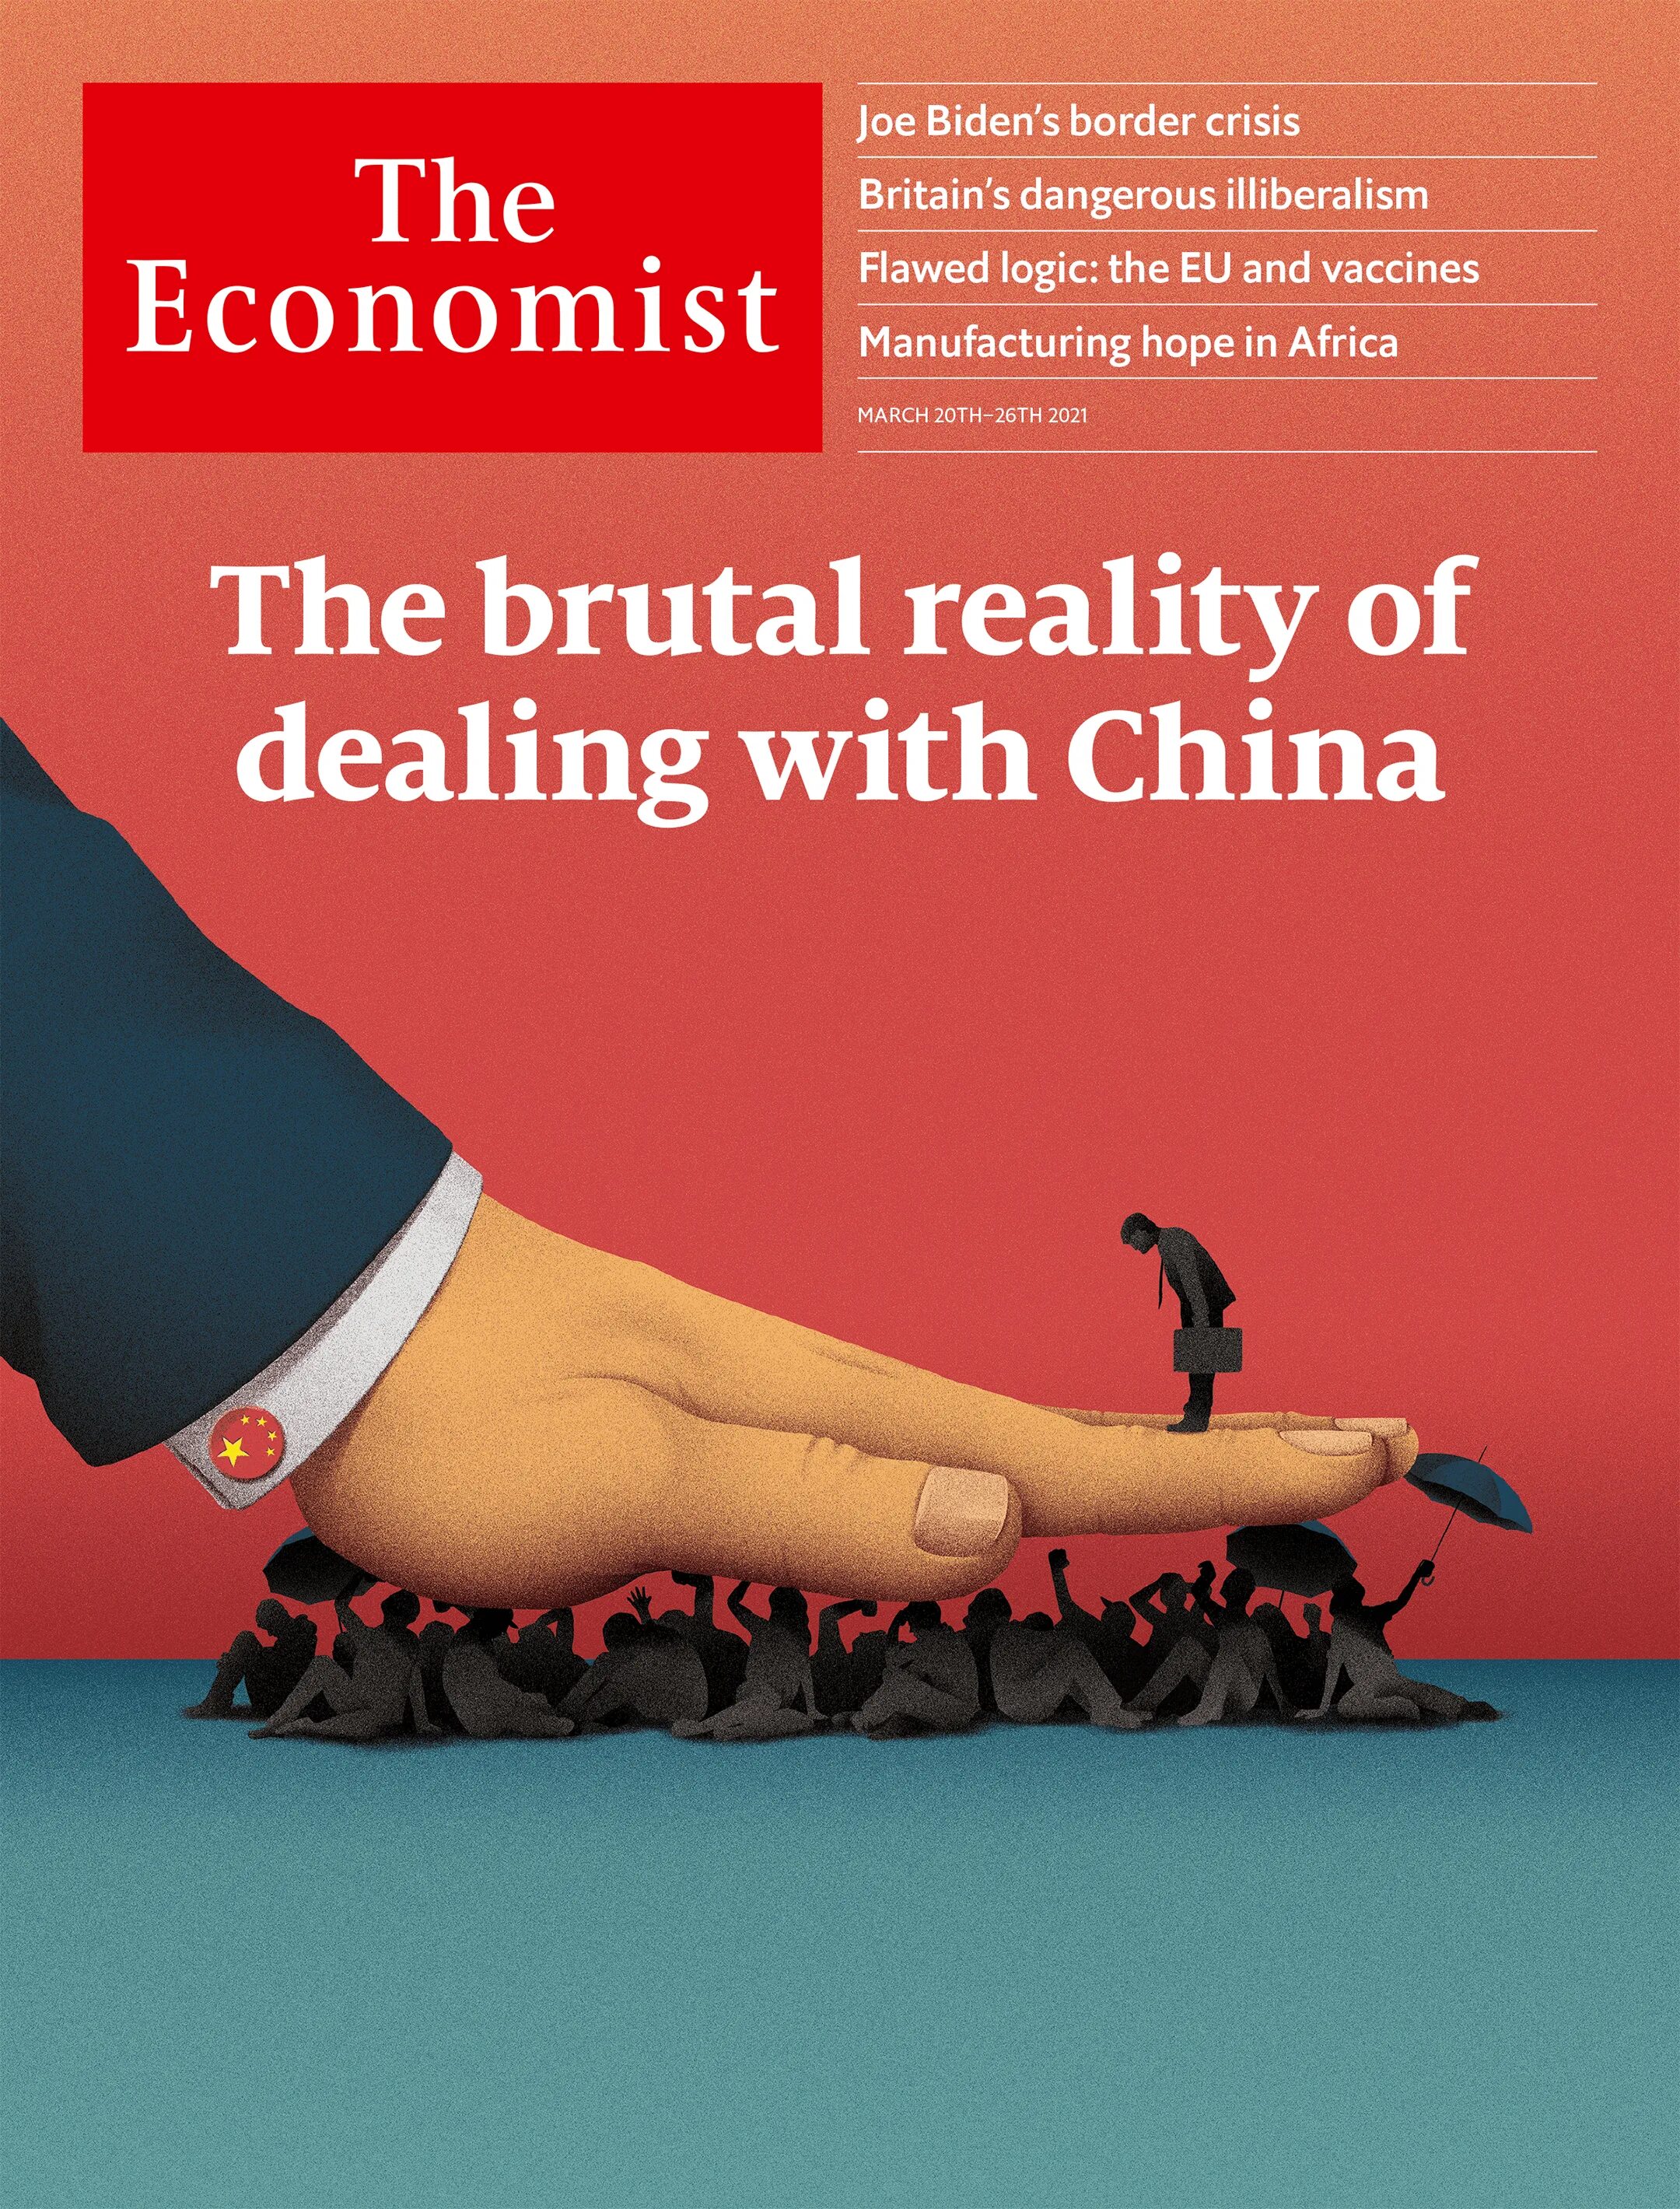 Последний журнал экономист. The Economist 2021 обложка. The Economist 2022 обложка. Журнал the Economist. Обложка журнала экономист 2023.